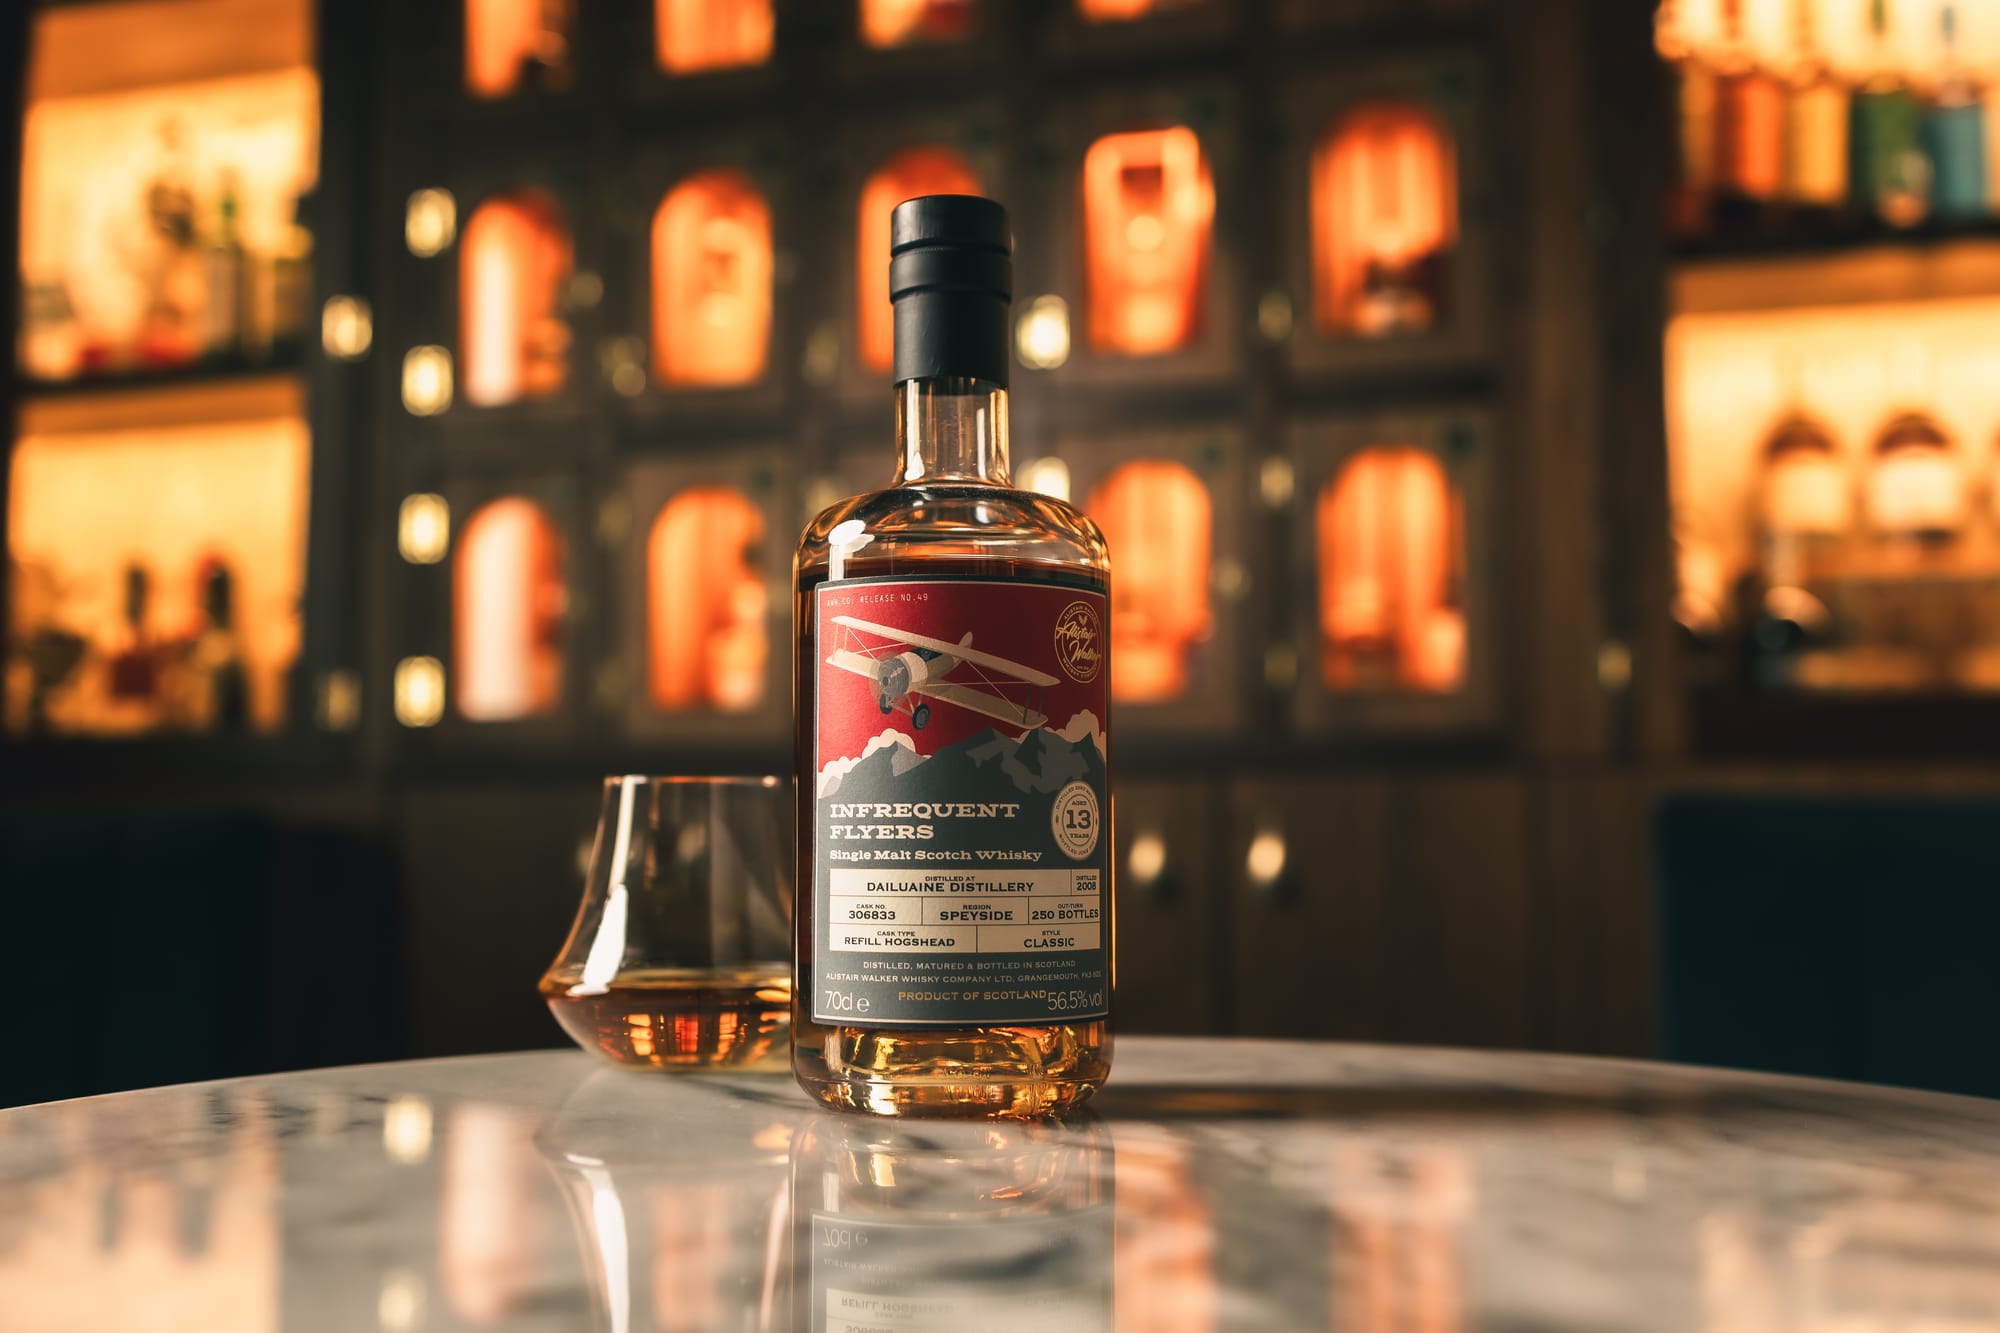 Infrequent Flyers Single Malt Scotch Whisky from Dailuaine distillery